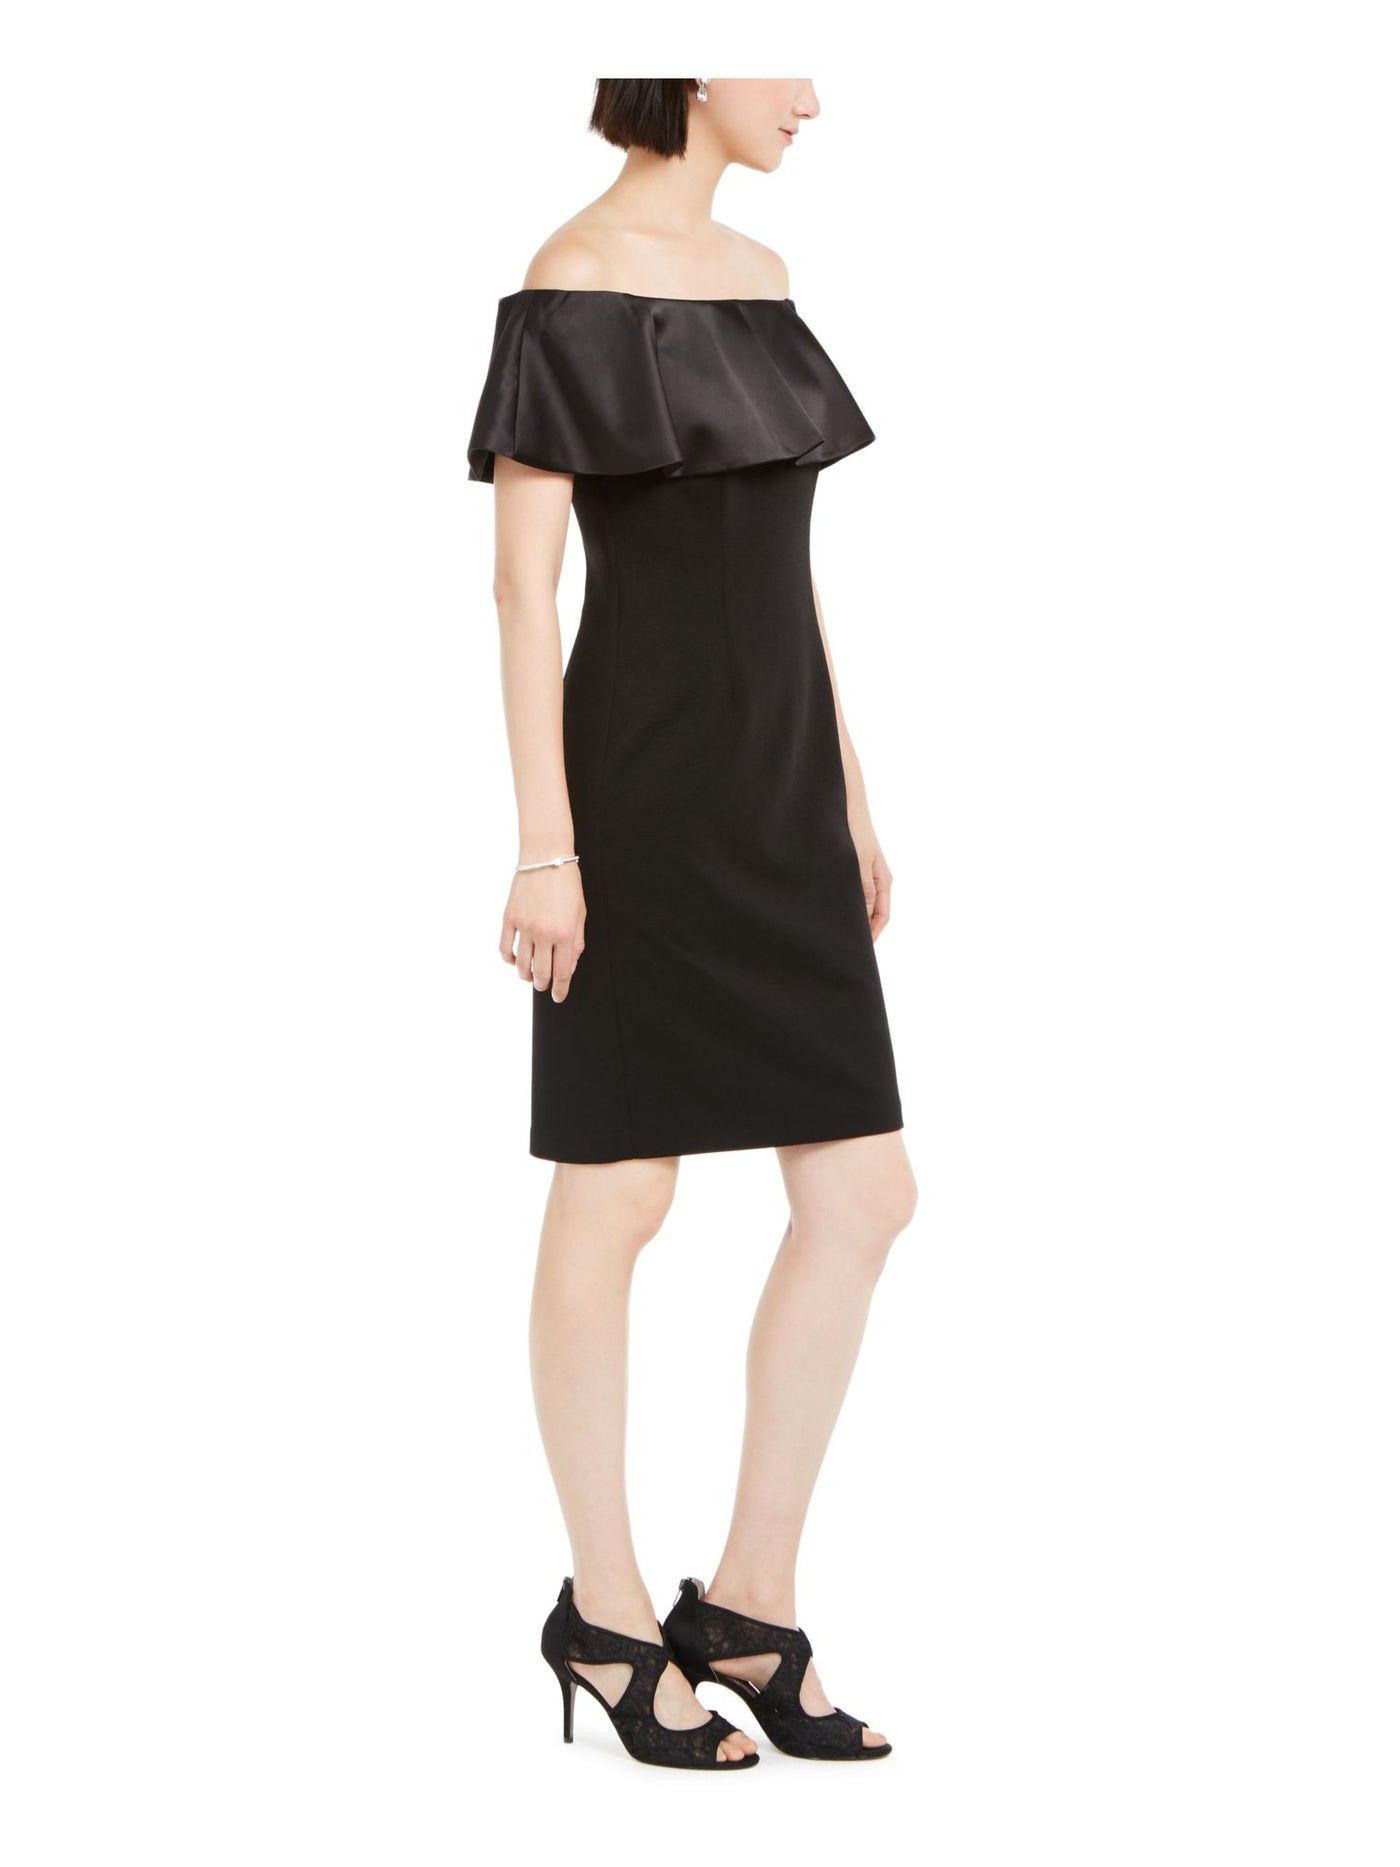 ADRIANNA PAPELL Womens Black Short Sleeve Strapless Short Formal Sheath Dress 8